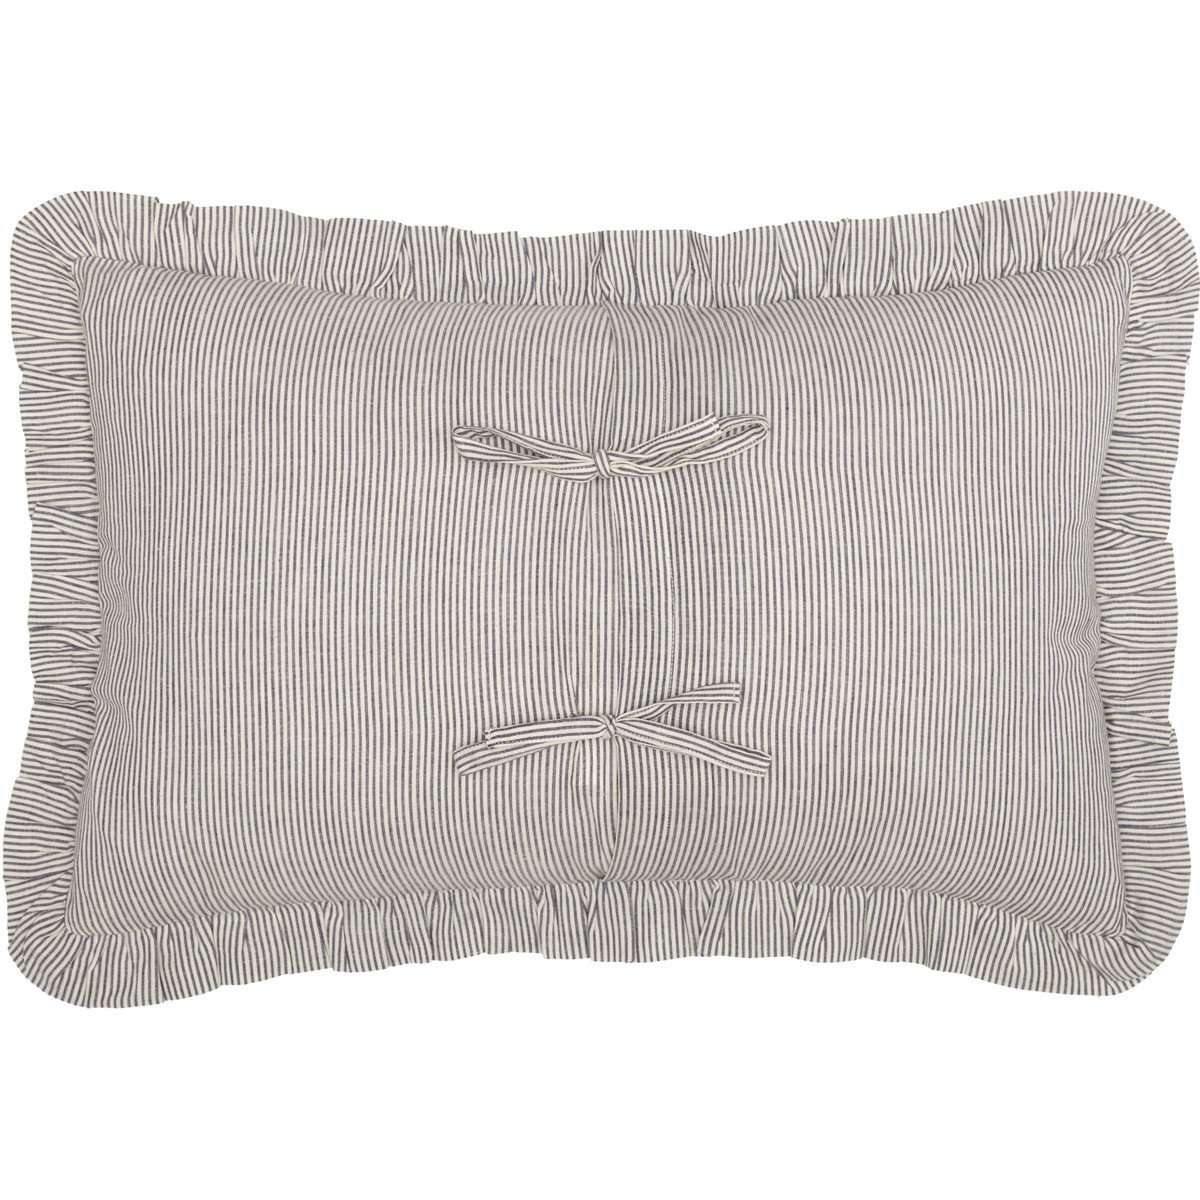 Dakota Star Farmhouse Blue Ticking Stripe Fabric Pillow 14x22 VHC Brands back